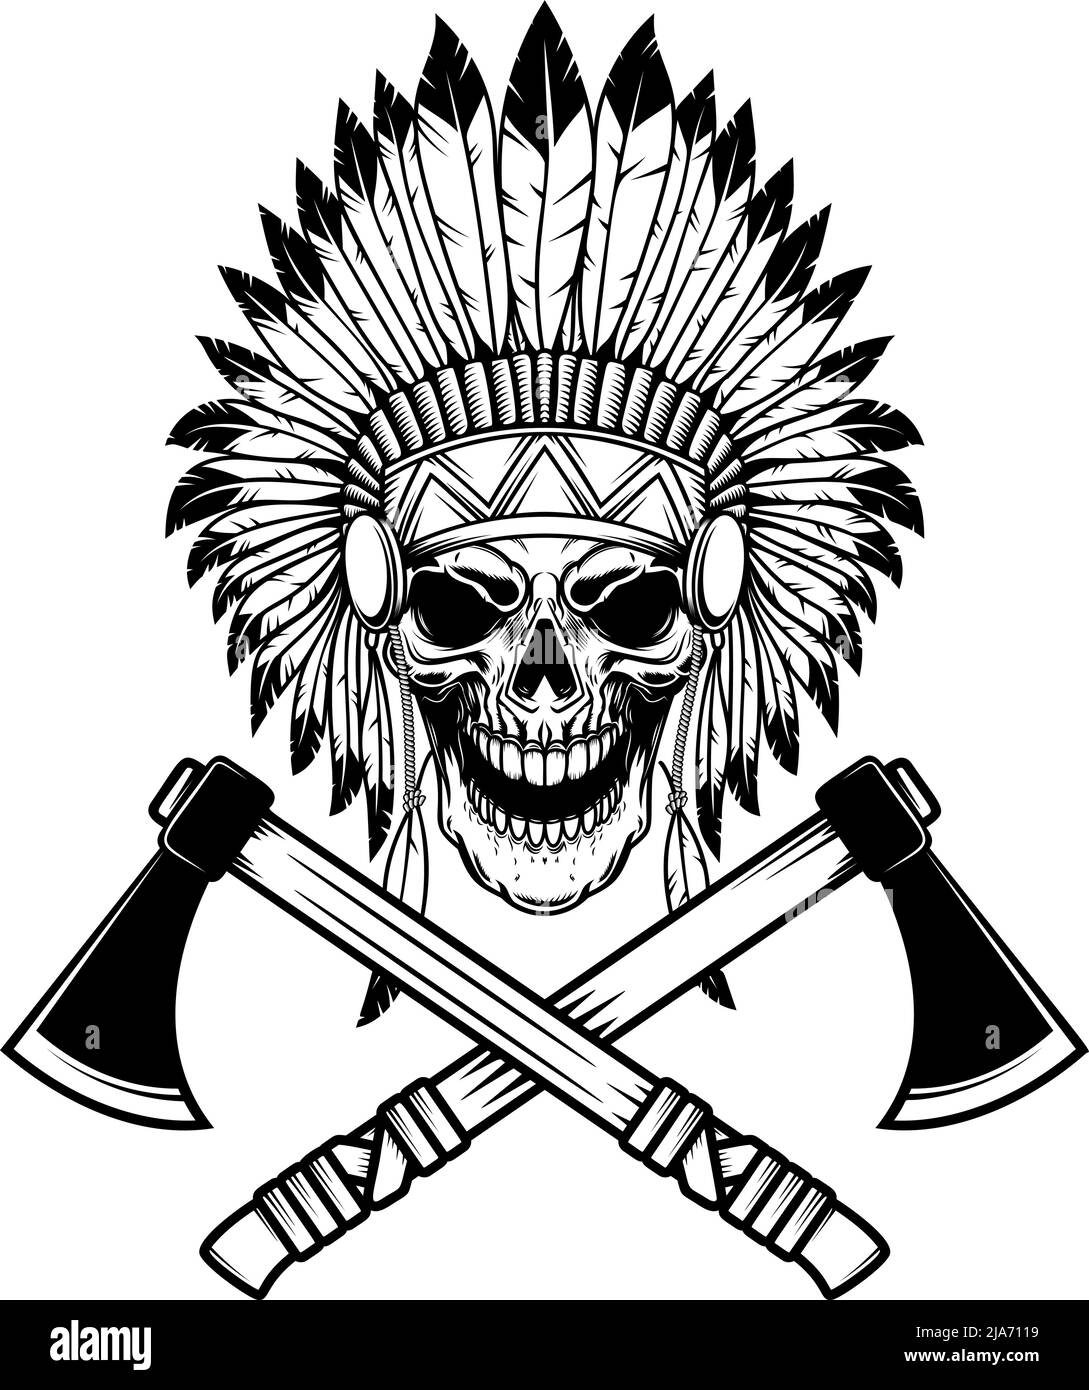 Old School Tattoo Tomahawk Print Native American Artwork Digital Download Native American Tomahawk Art Traditional Tattoo Flash